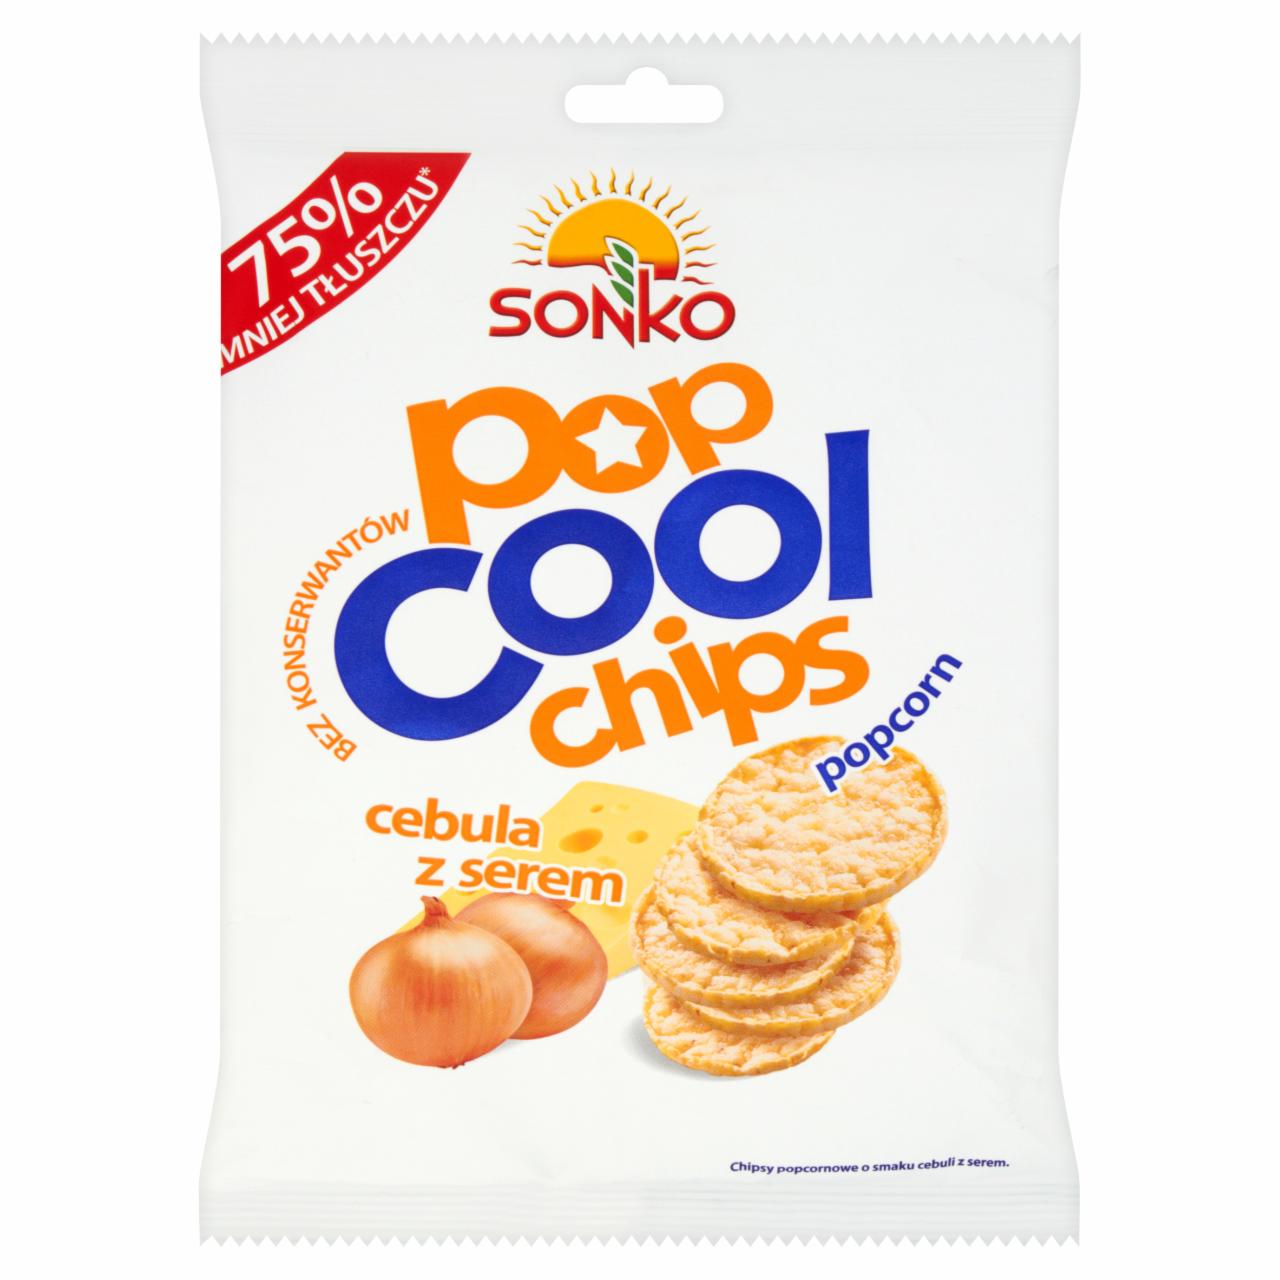 Zdjęcia - Sonko Popcool Chips Chipsy popcornowe o smaku cebuli z serem 60 g